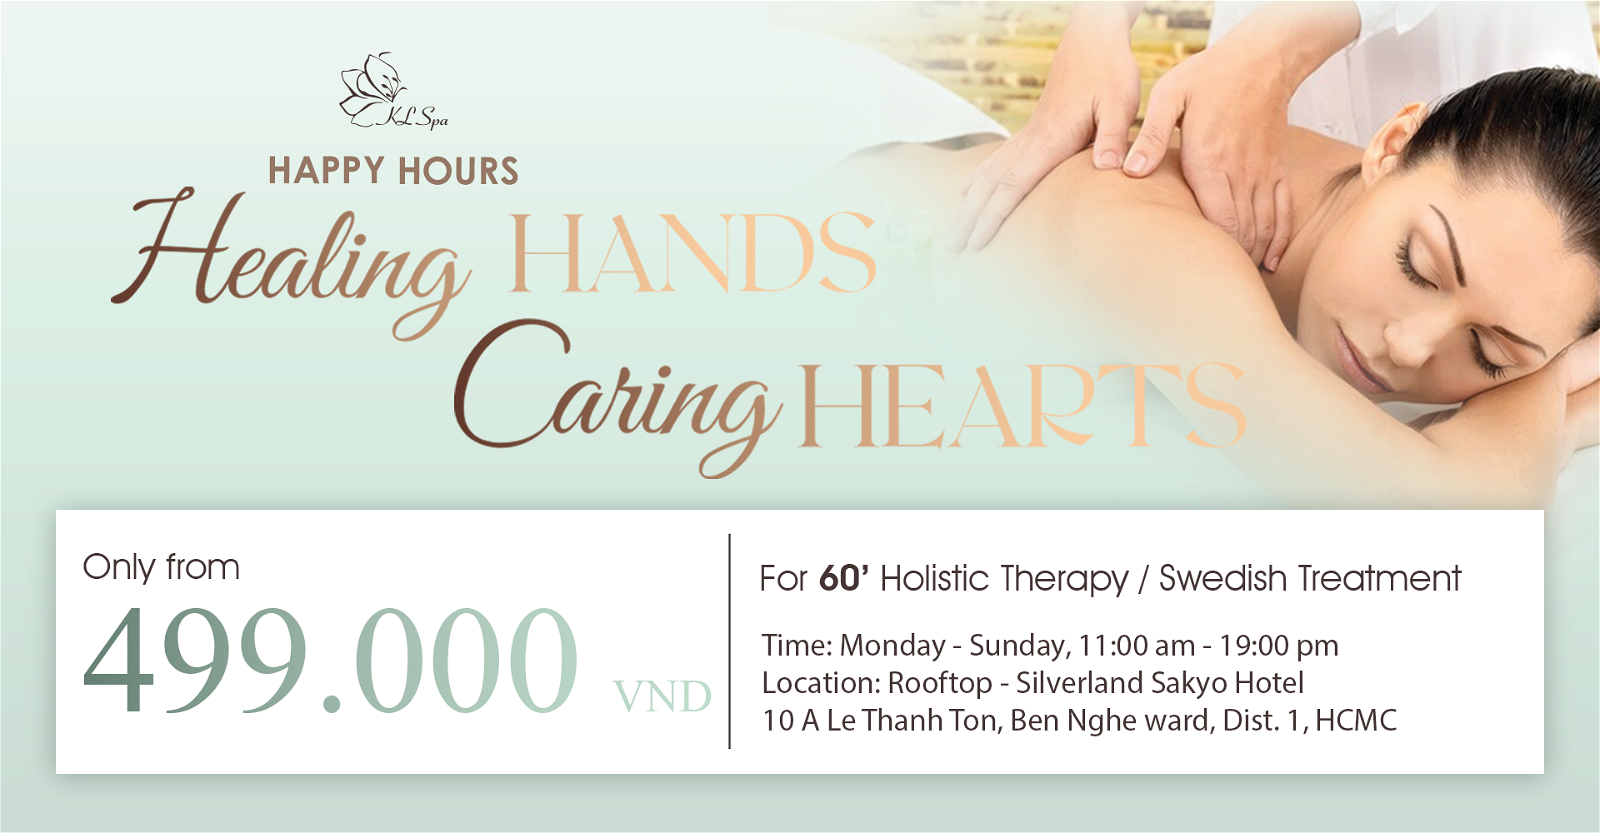 Silverland Sakyo – Healing Hands, Caring Hearts<br>KL Spa | 11:00 AM – 19:00 PM